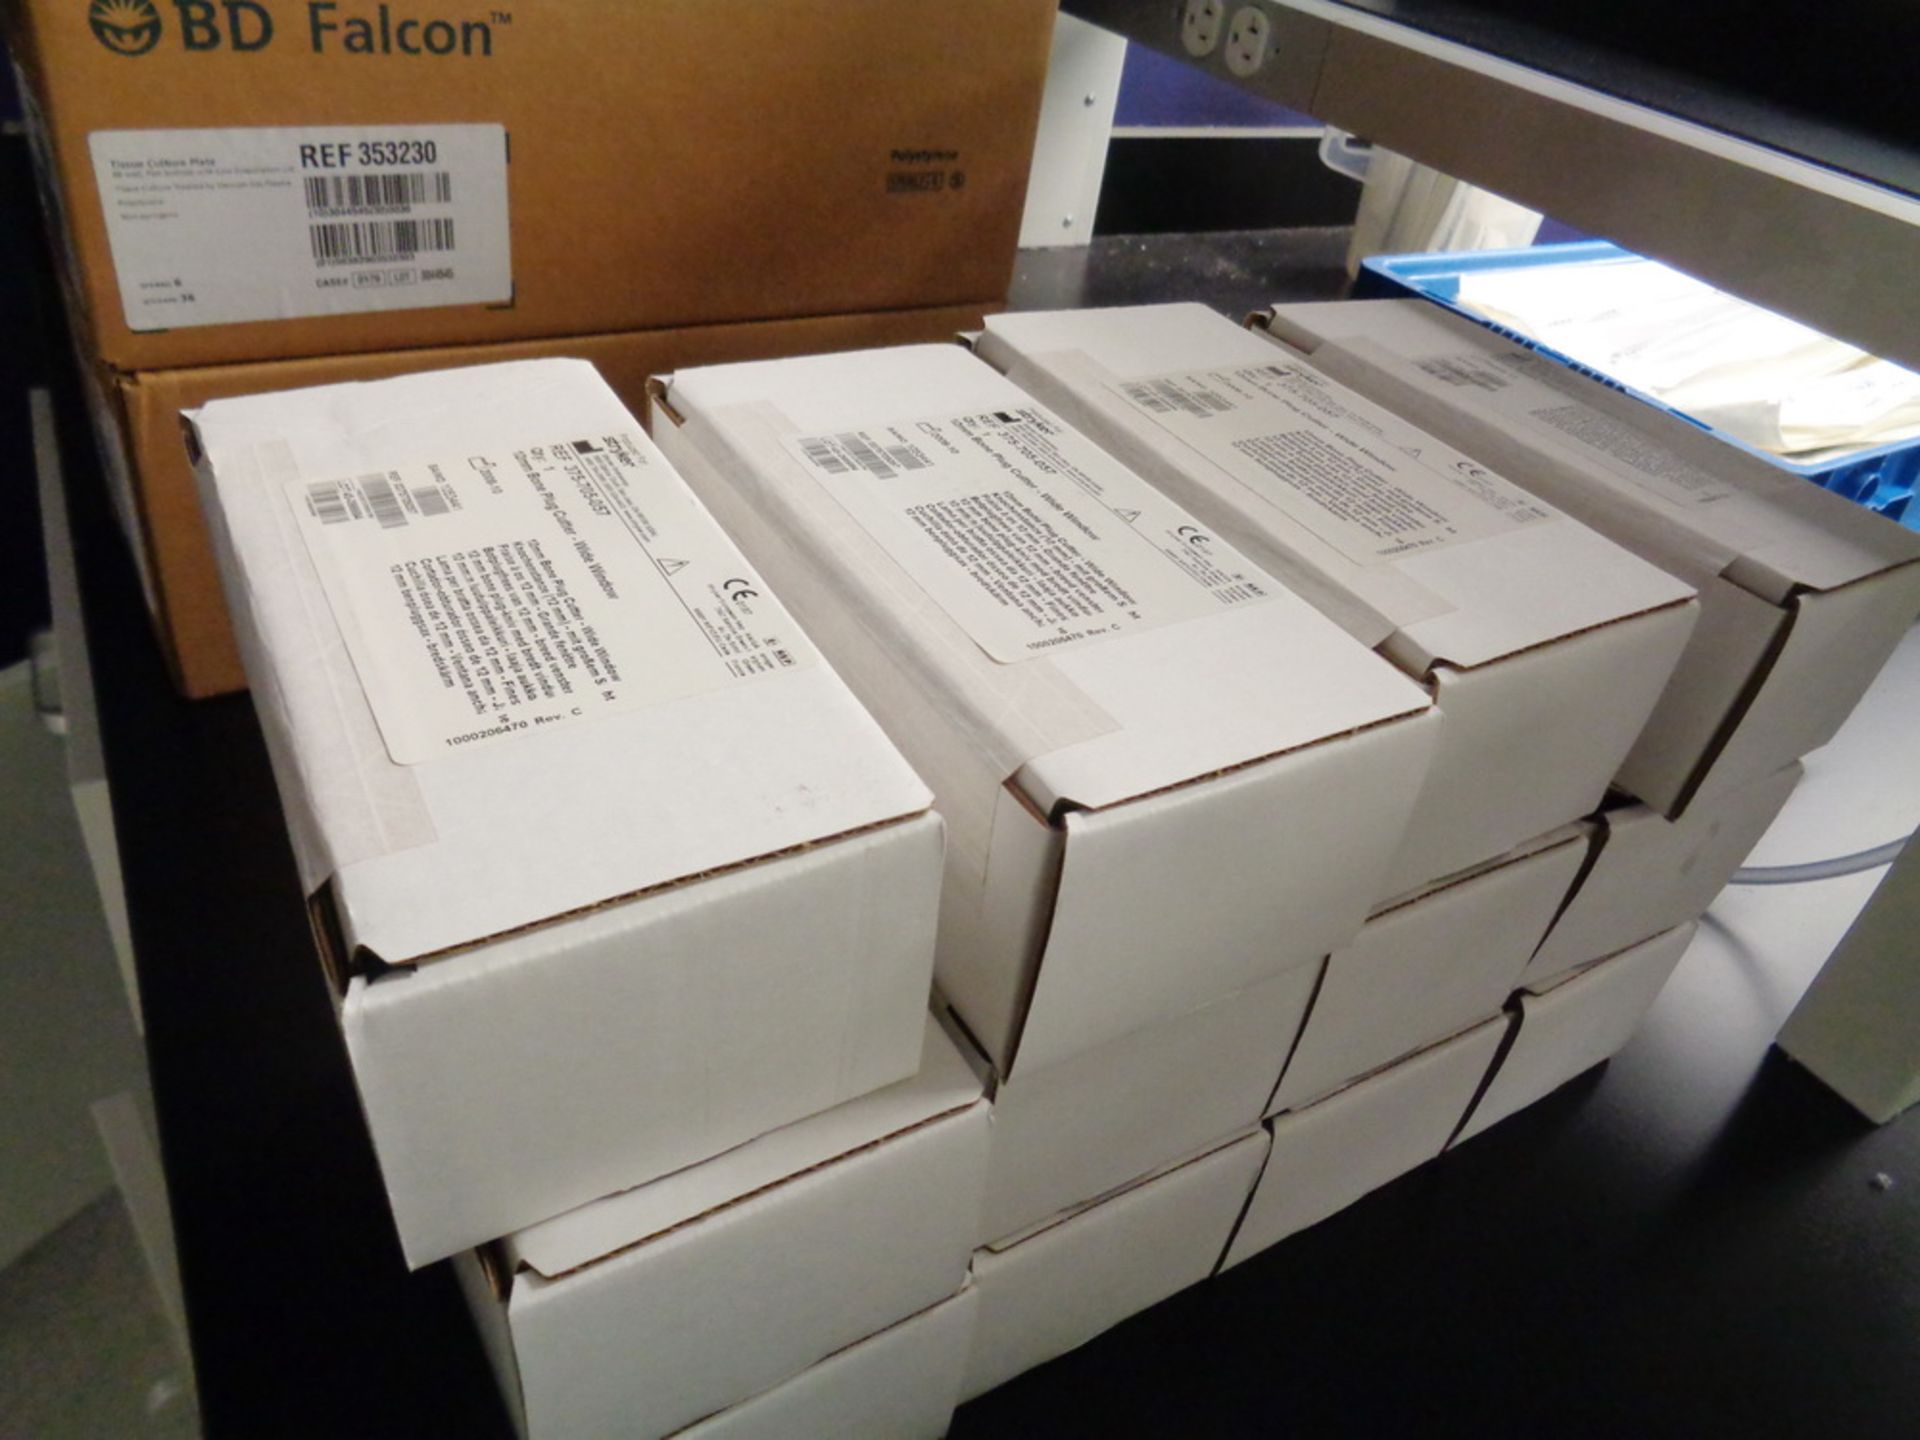 (12) Boxes of Stryker 12 mm Bone Plug Cutter, wide window, Product # 375-705-057